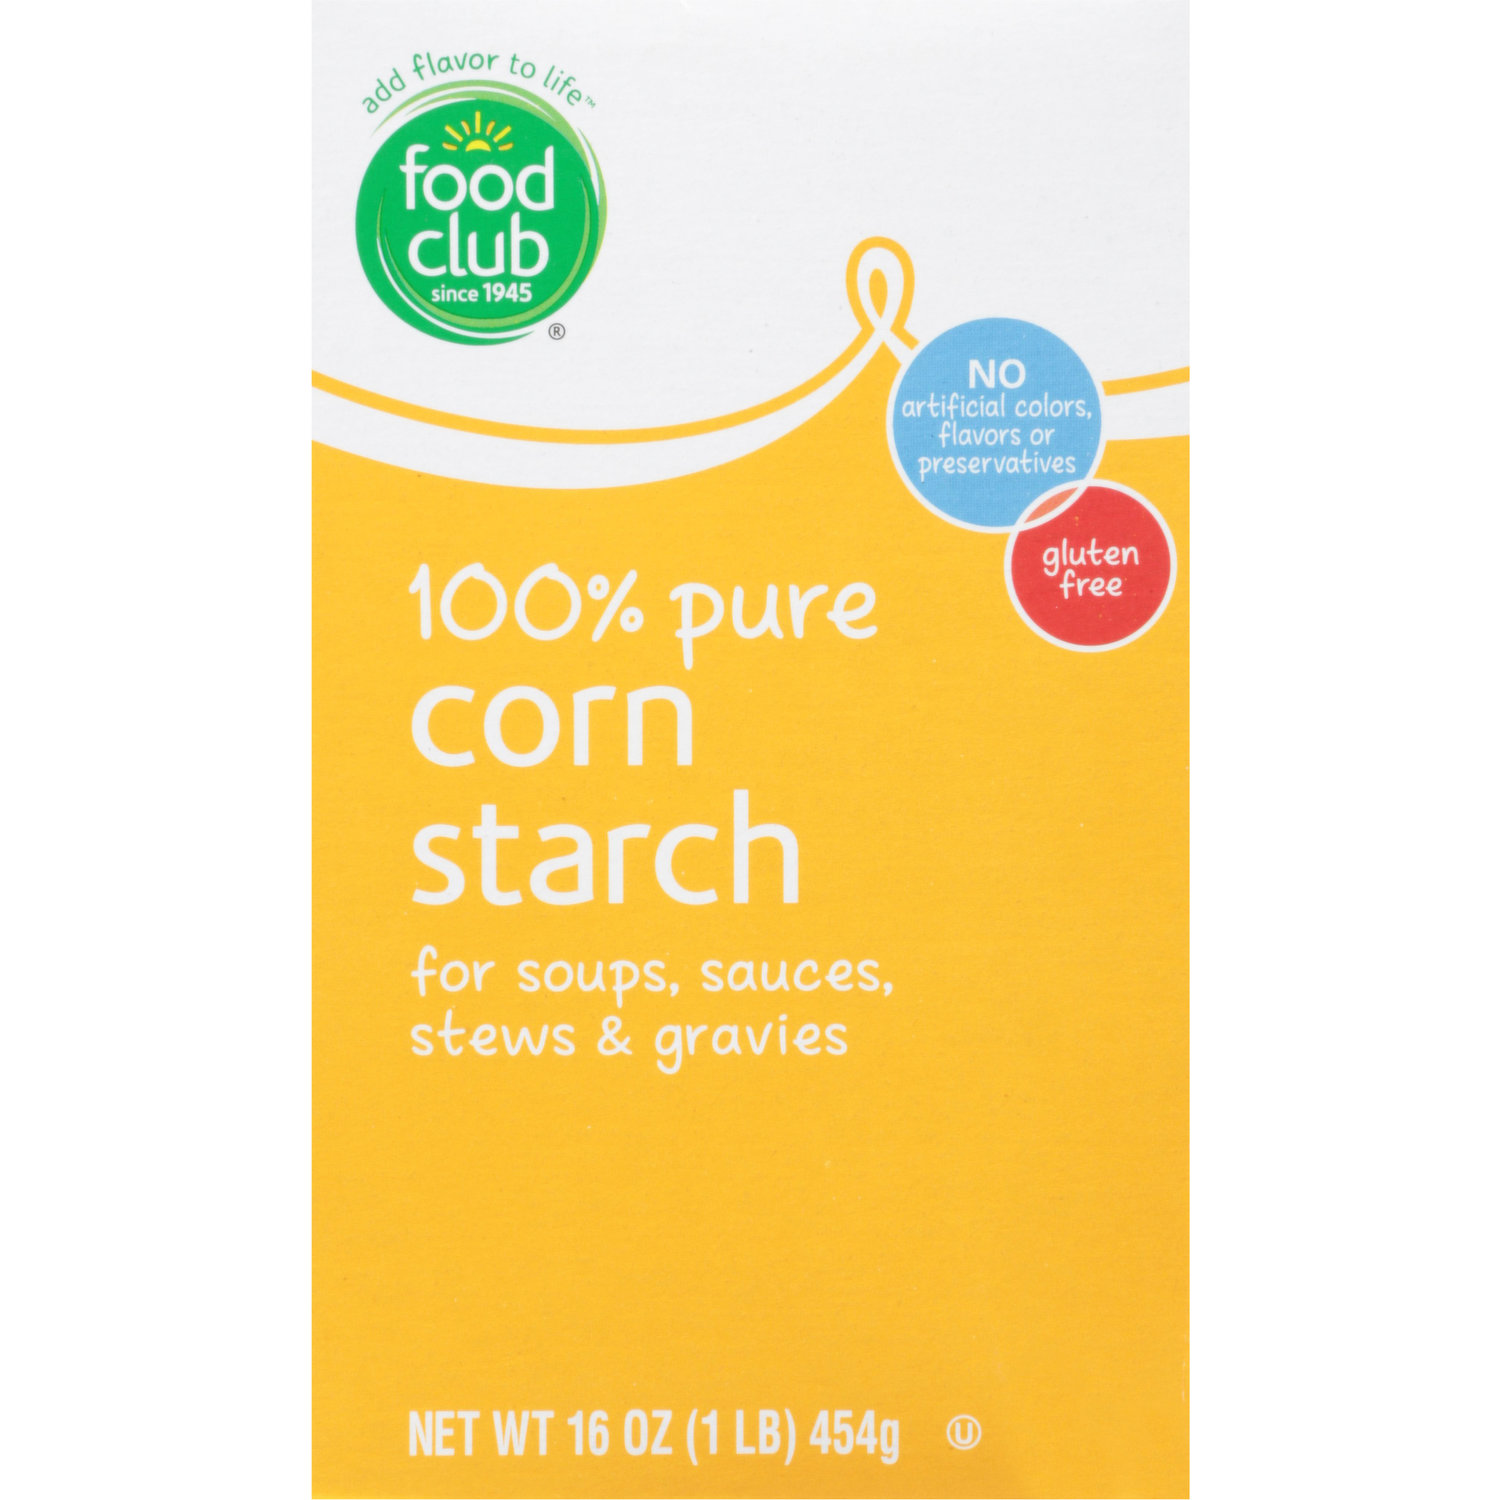 King Corn Starch Water Bottle Chunks!!! 🤤🤤🤤 #cornstarch #cornstarchasmr  #cornstarchchunks #cornstarchsqueaks #starch #kingcornstarchedits…